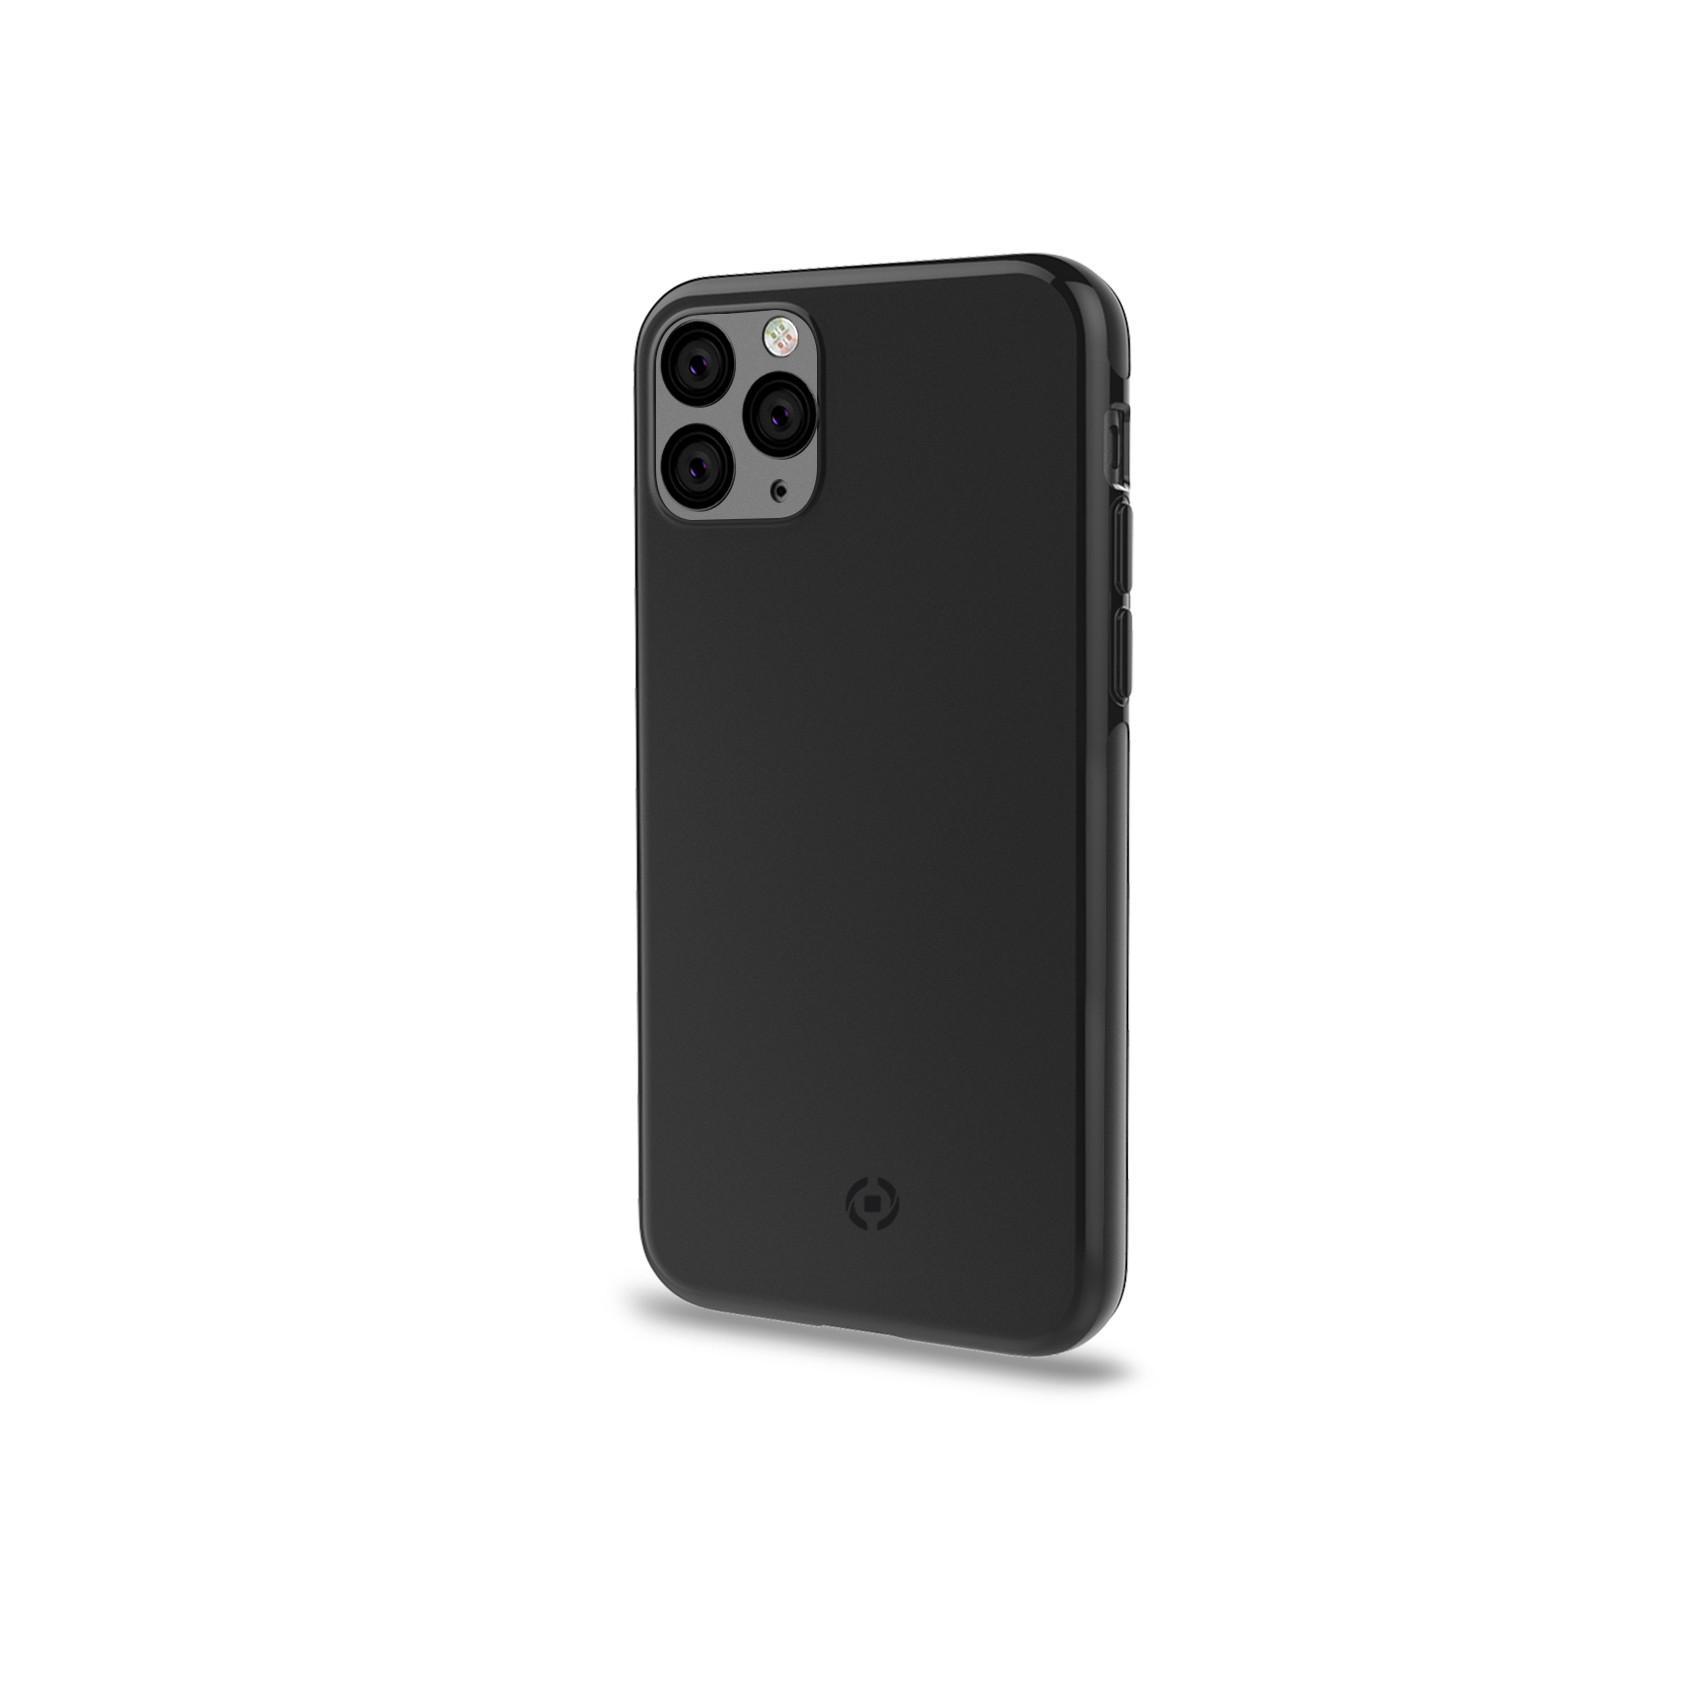 Ghostskin Iphone 11 Pro Bk Celly Ghostskin1000bk 8021735752943